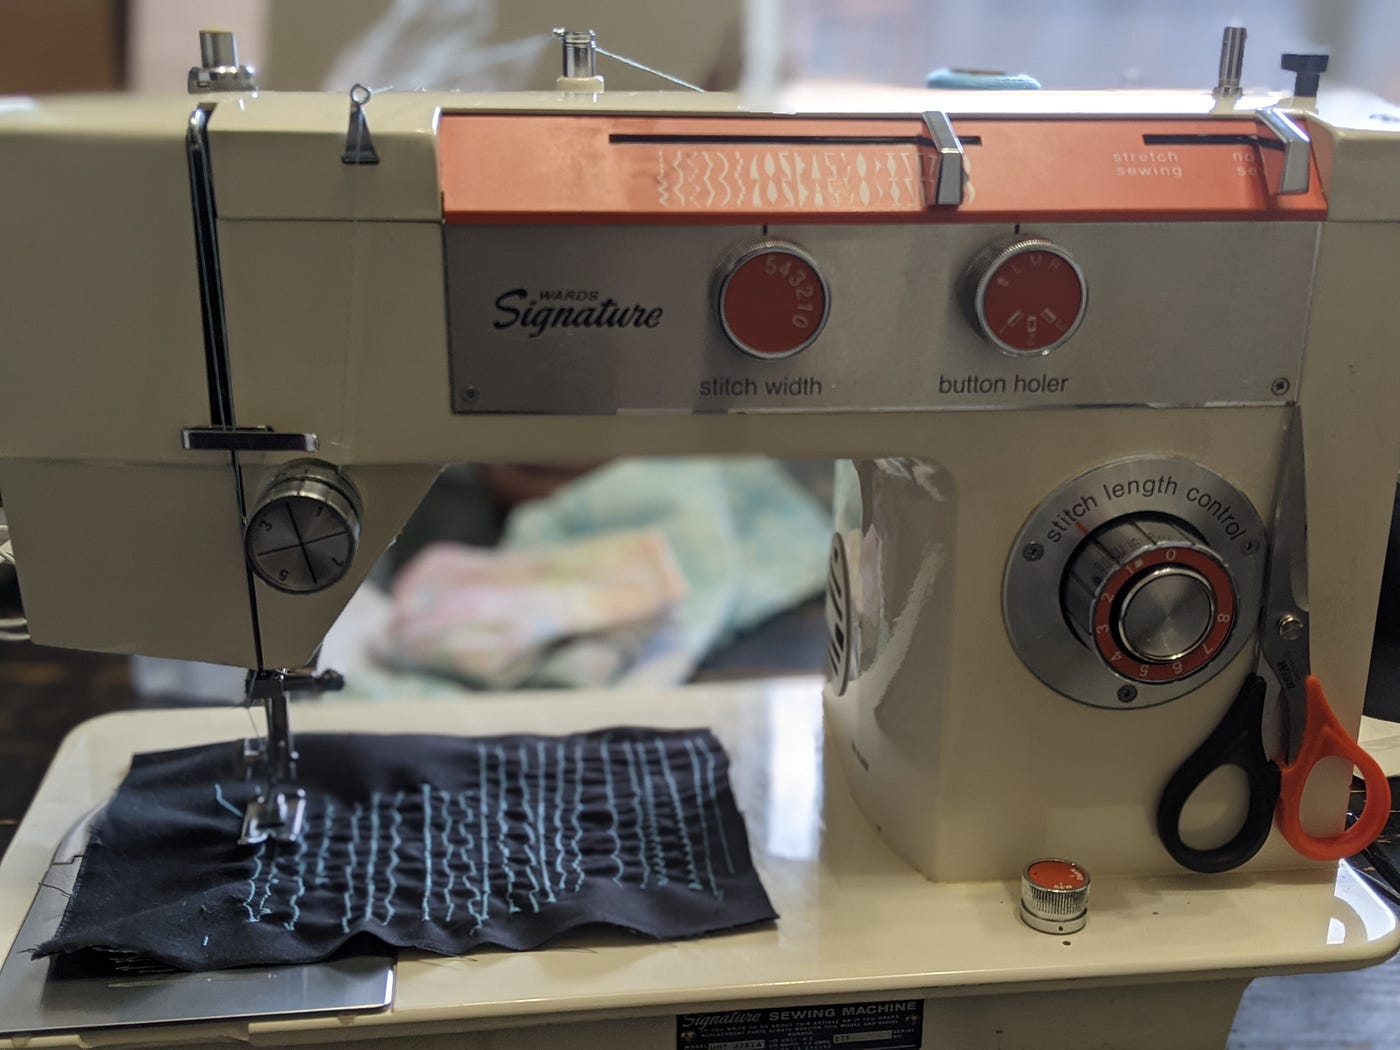 Sewing Machines, Mr. Sewing Machine